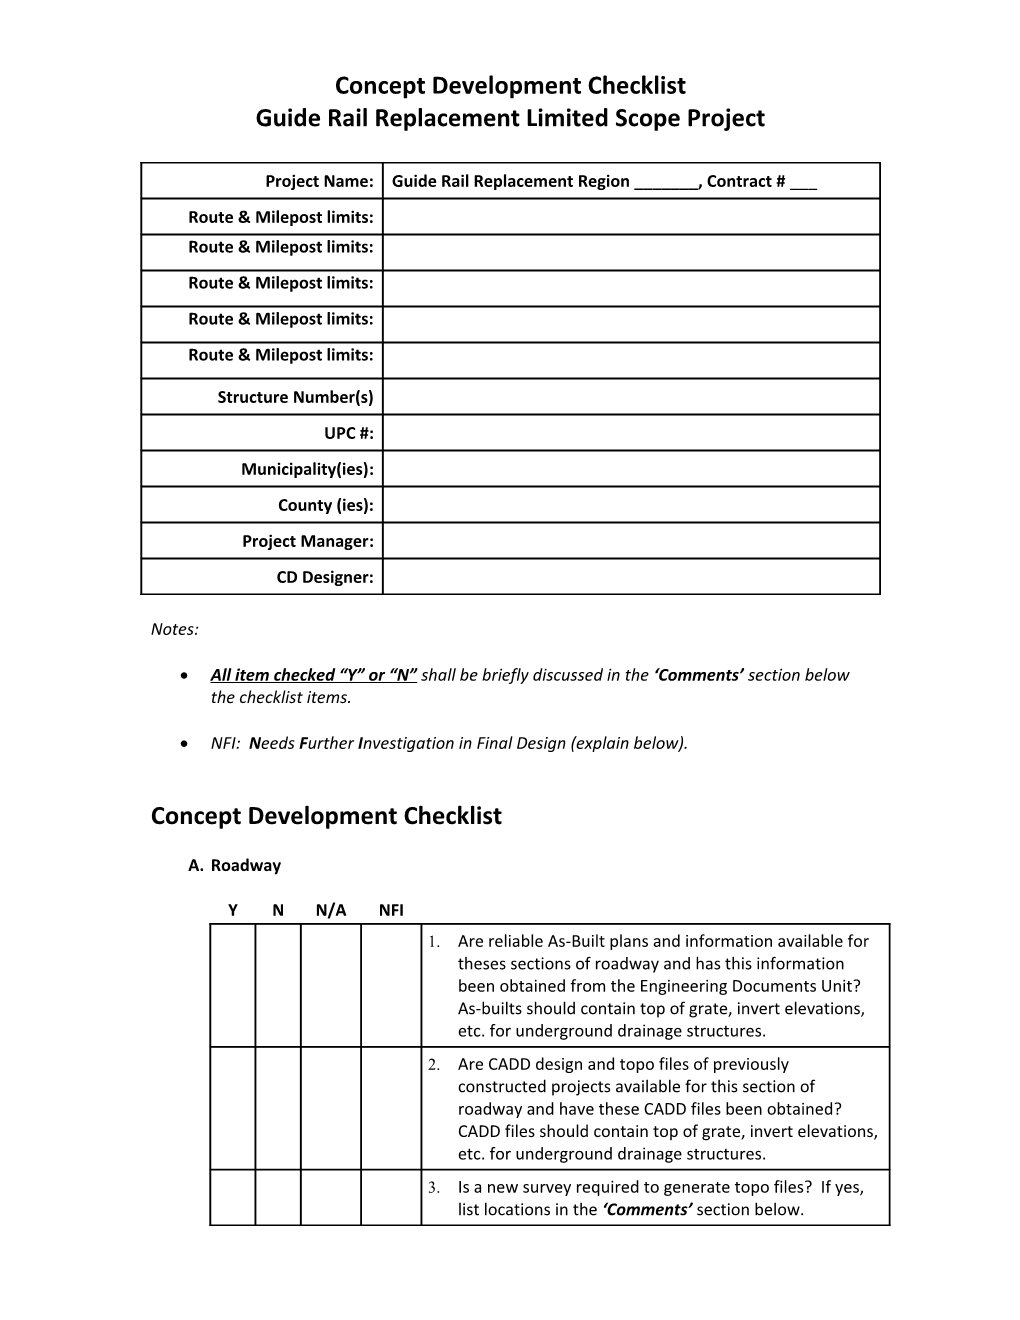 Limited Scope Concept Development Guide Rail Replacement Checklist